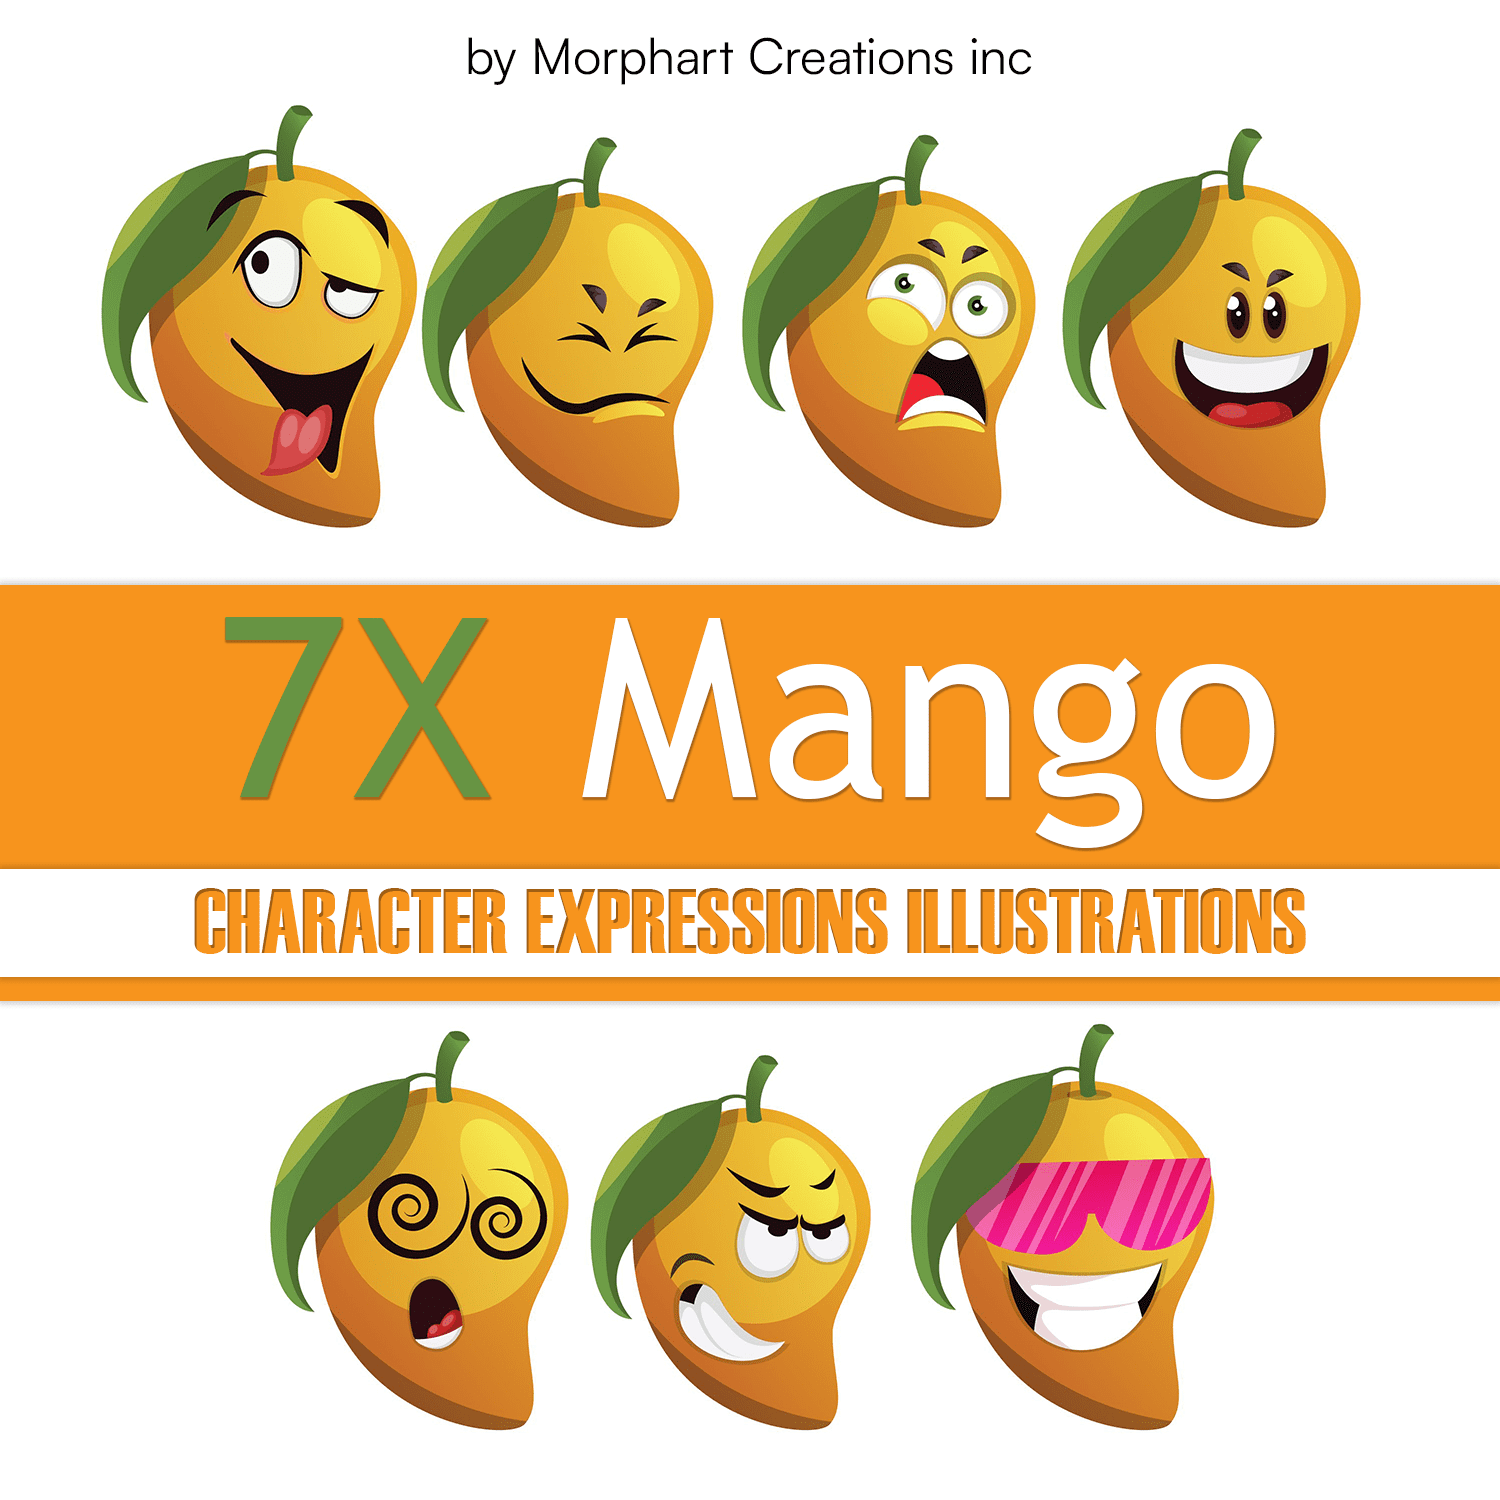 7X Mango Character Expressions Illustrations created Morphart Creations inc.